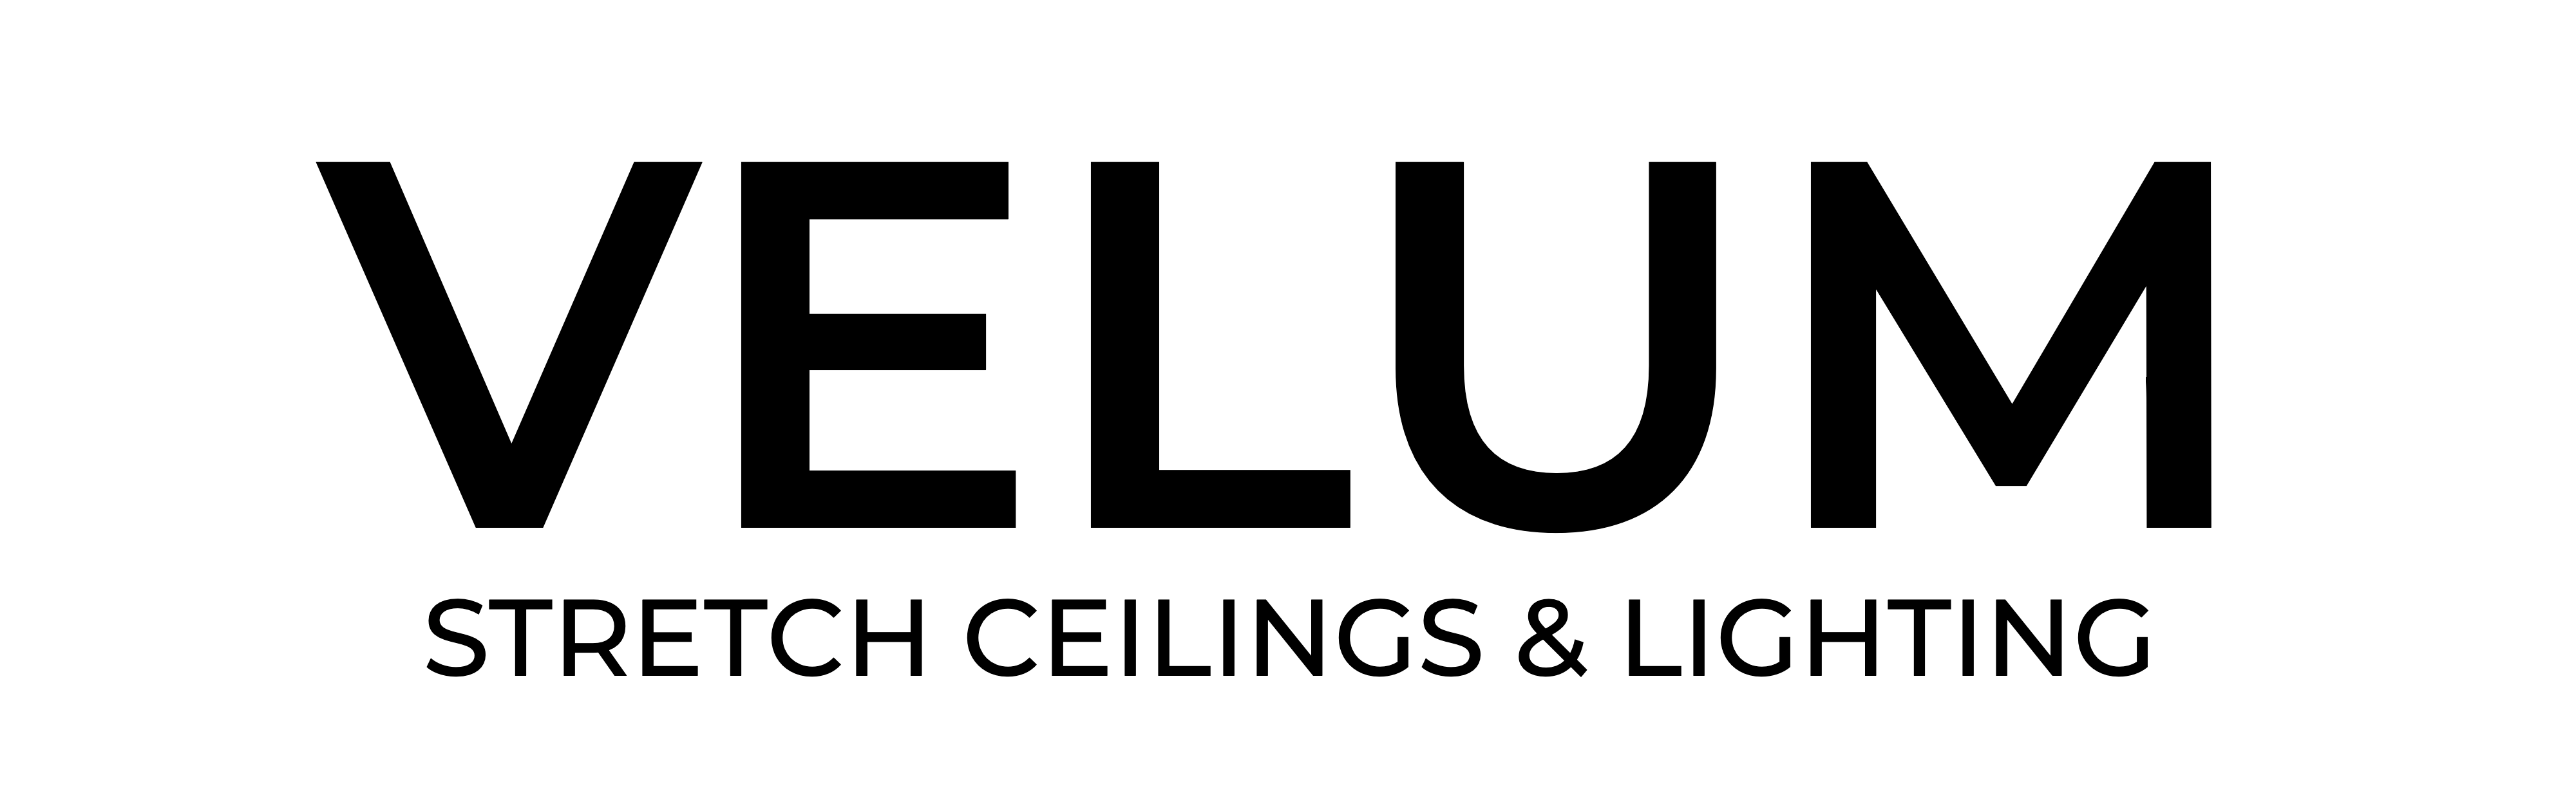 velum-STRETCH-CEILINGS-LIGHTING-logo